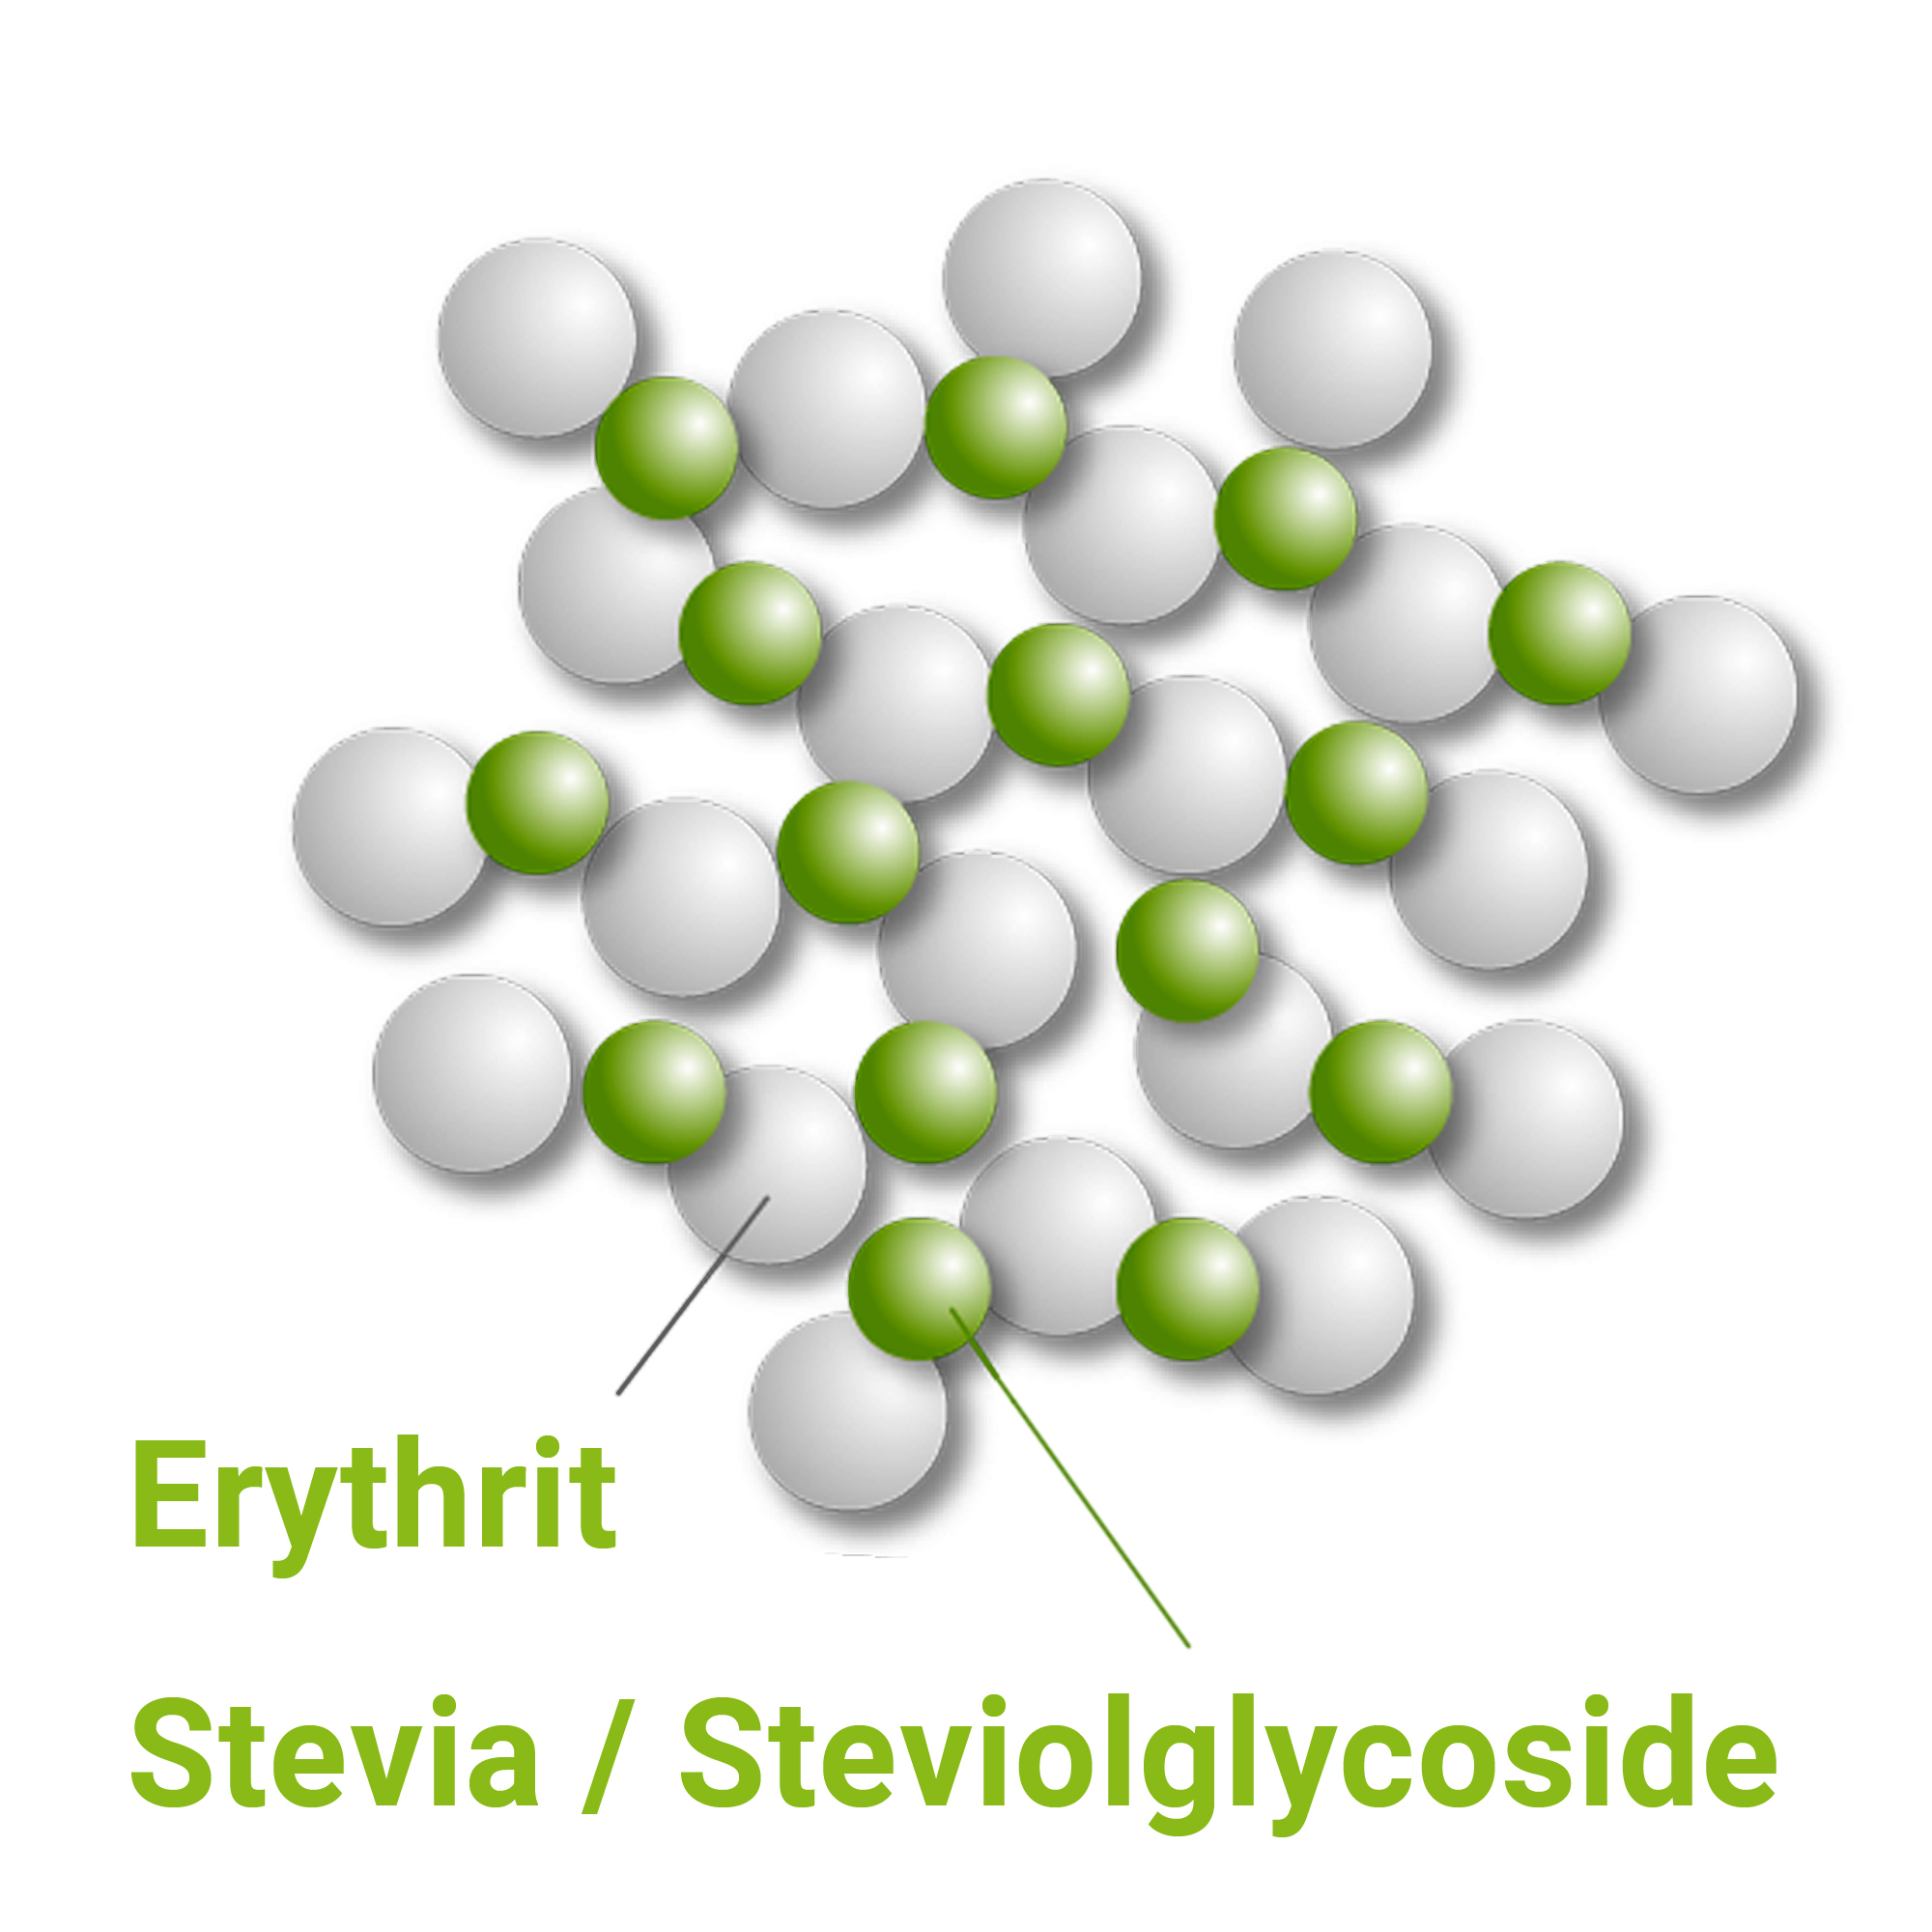 La mezcla de Stevia y eritritol es un edulcorante natural.